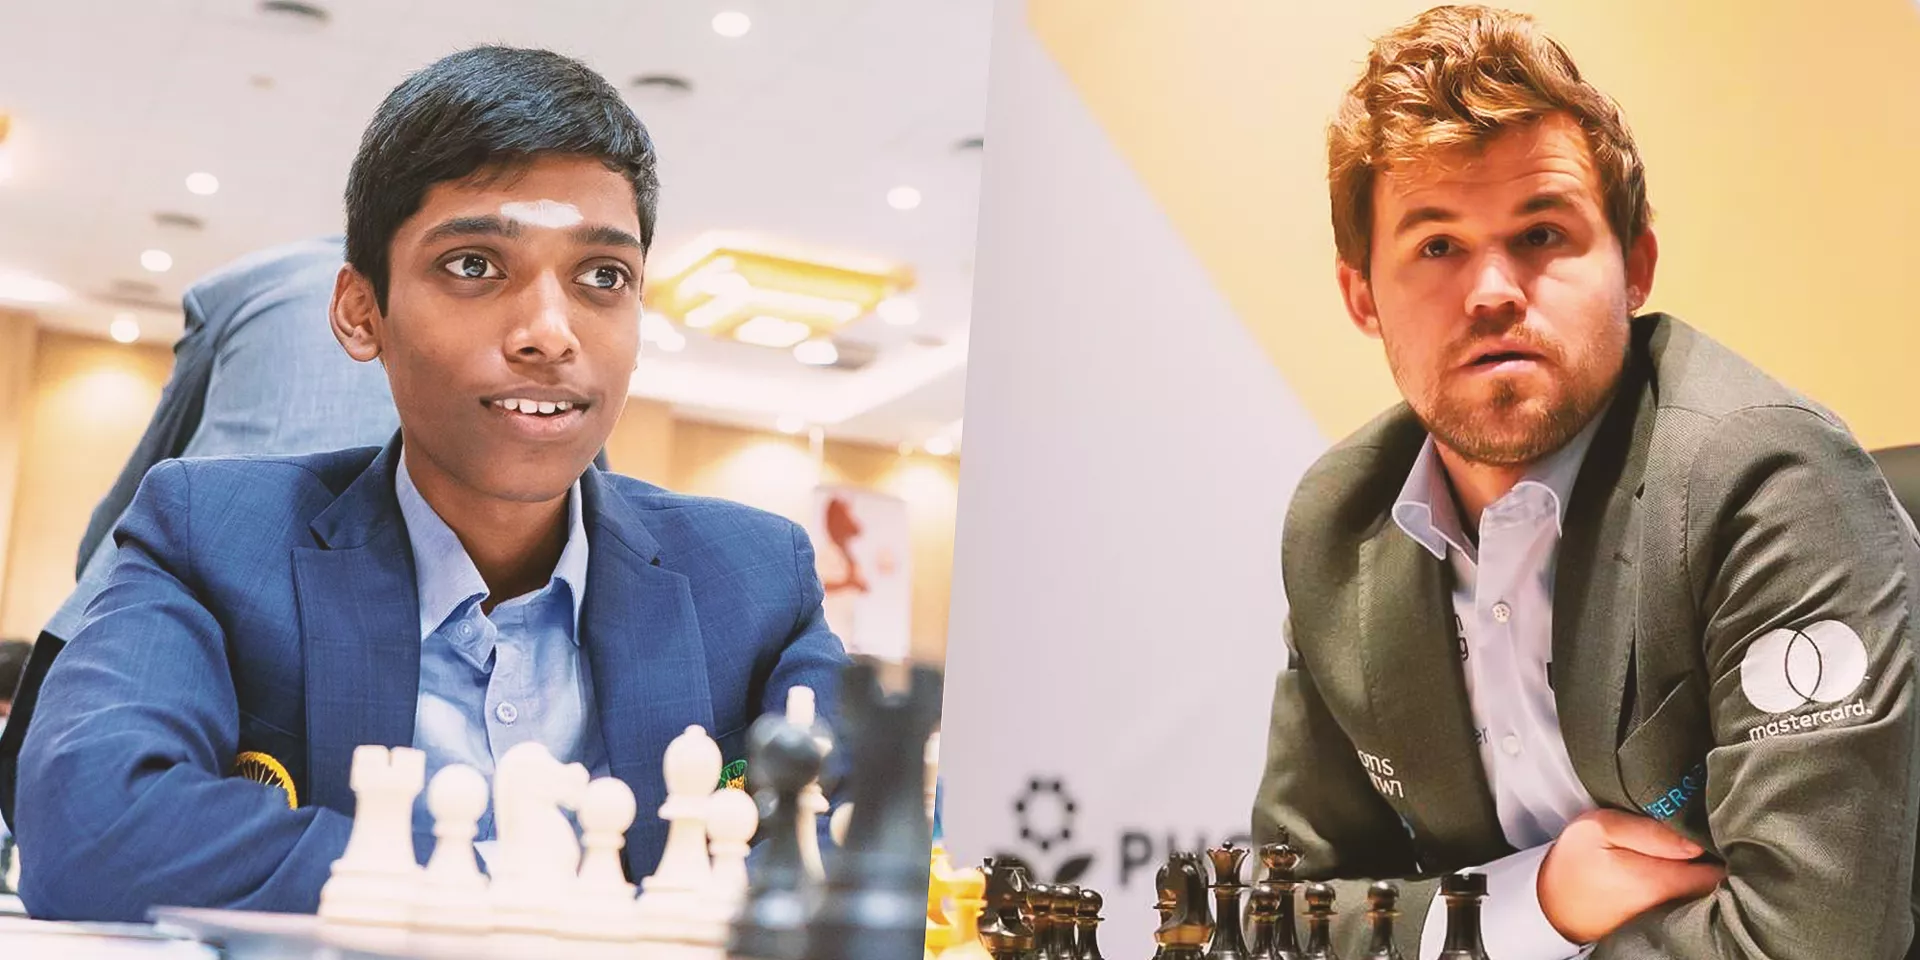 Praggnanandhaa vs Carlsen, Chess World Cup Final 2023 Highlights: Magnus  Carlsen Clinches Title With Tie-break Win Over Prag - News18